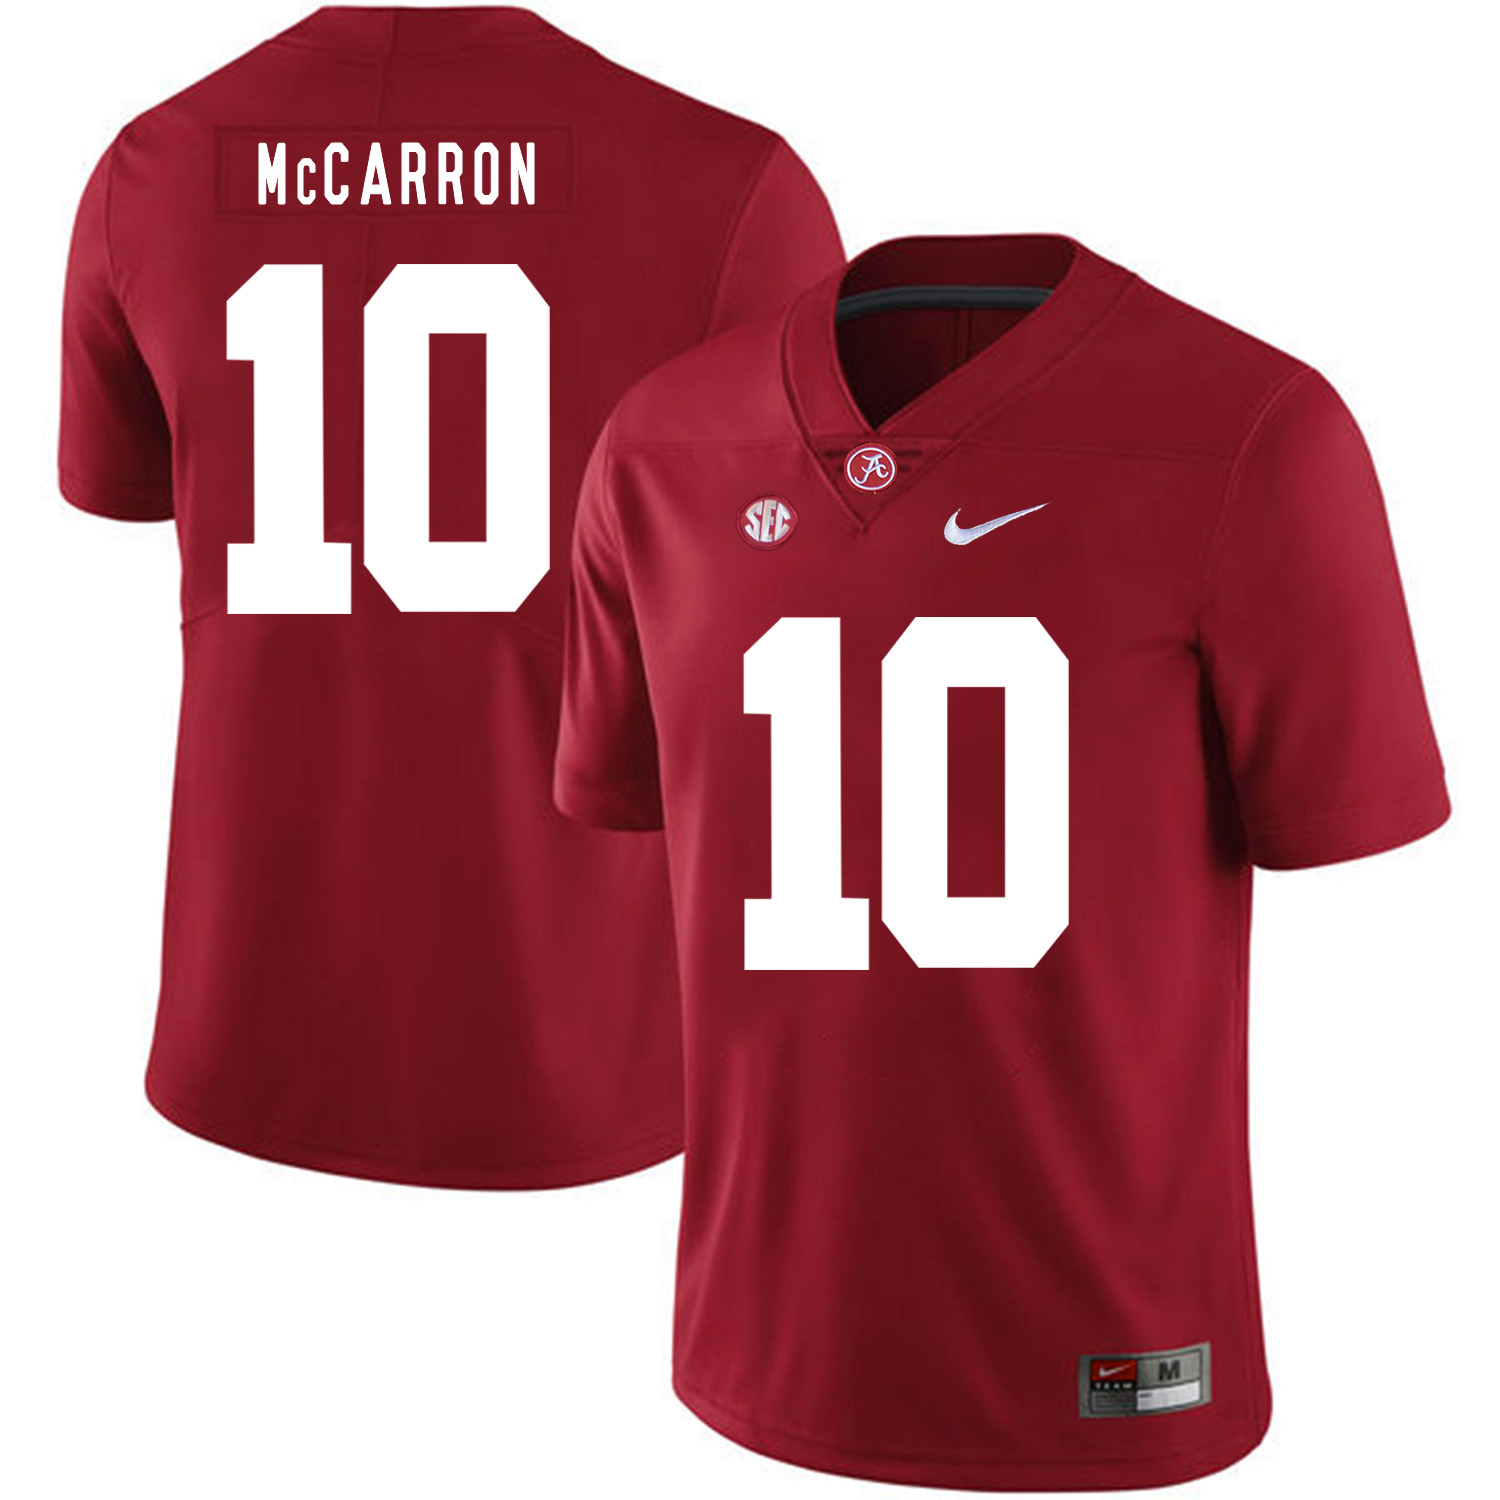 Alabama Crimson Tide 10 A.J. McCarron Red Nike College Football Jersey